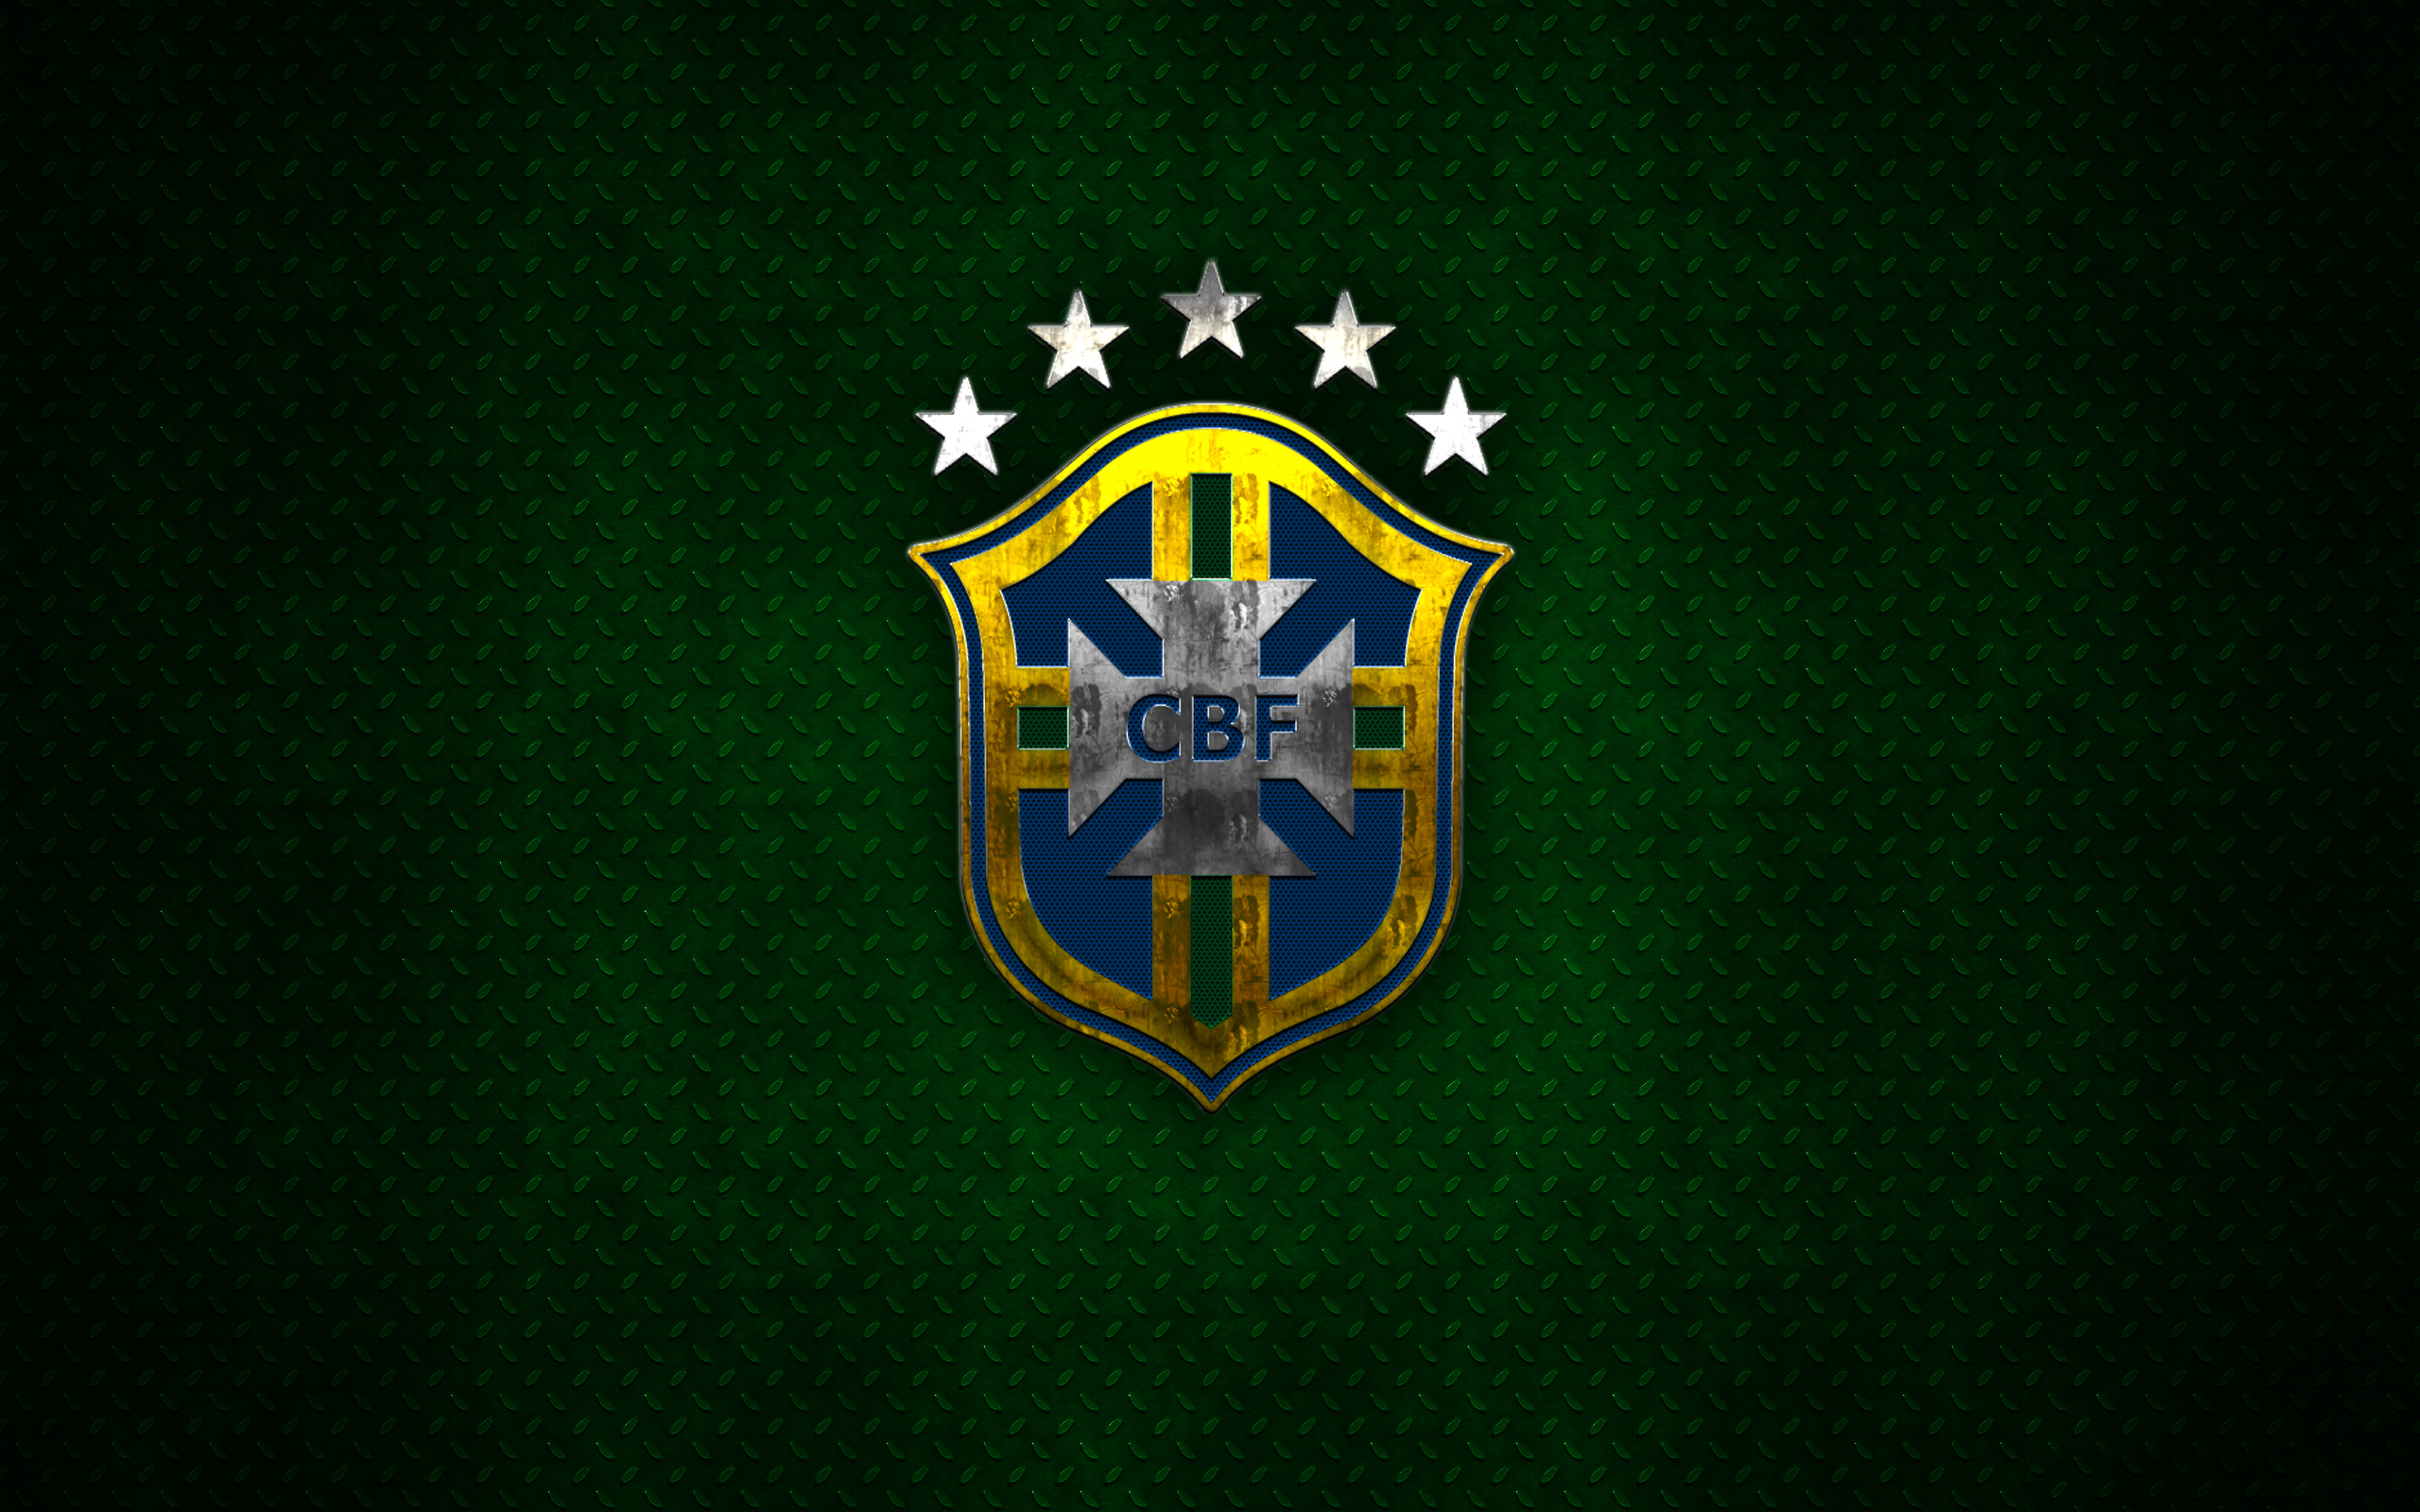 Brazil National Football Team Hd Wallpaper Background Image 2560x1600 Id 978912 Wallpaper Abyss